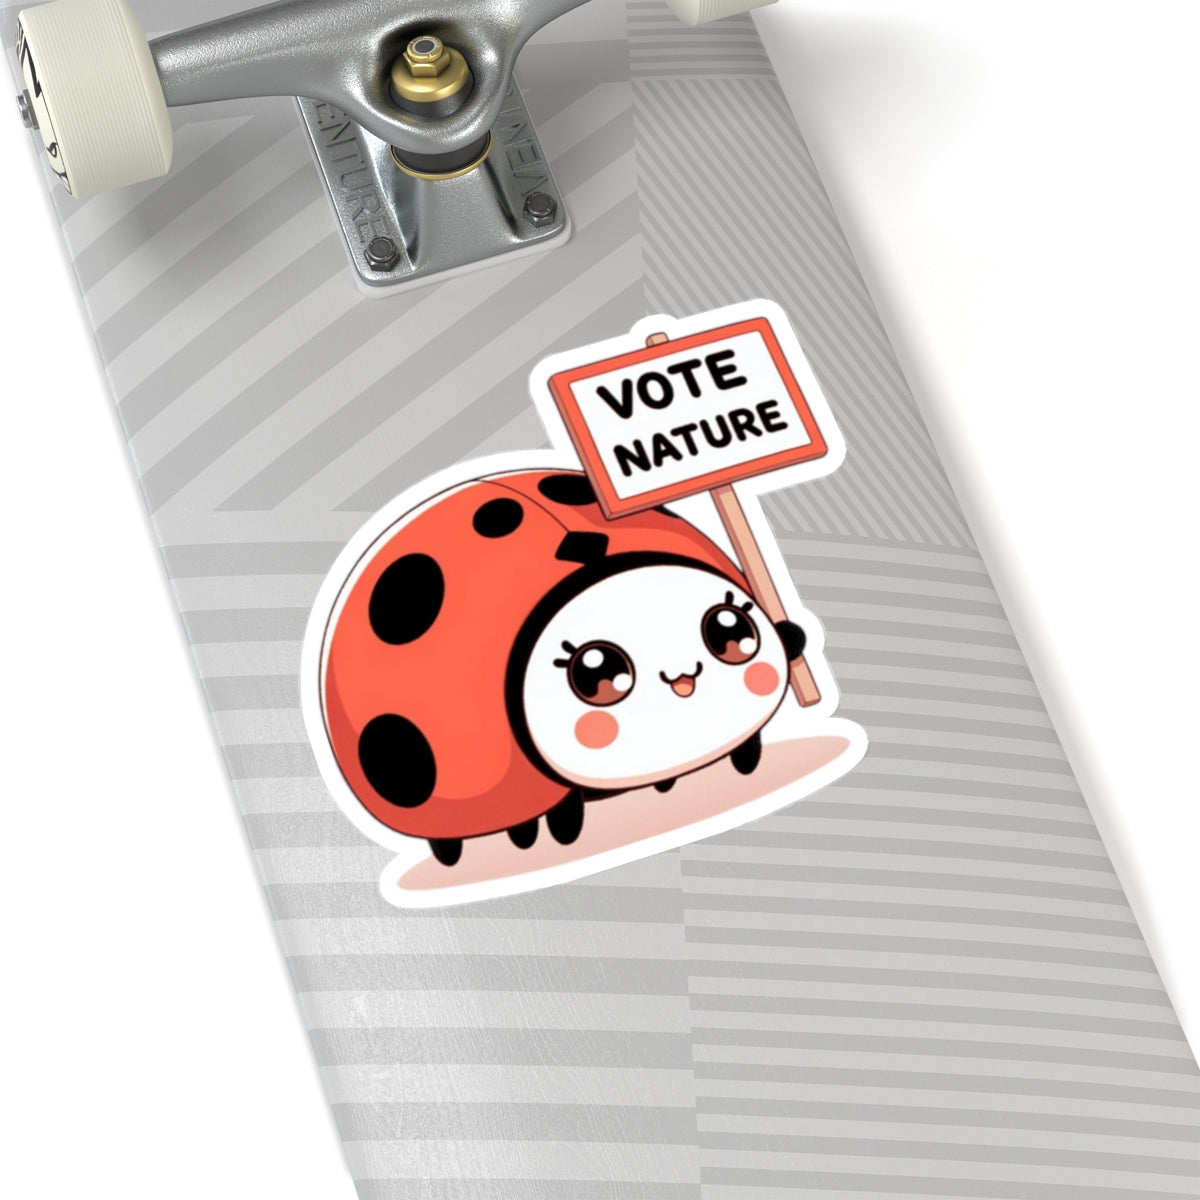 Inspirational Cute Ladybug Statement vinyl Sticker: Vote Nature! for laptop, kindle, phone, ipad, instrument case, notebook, mood board